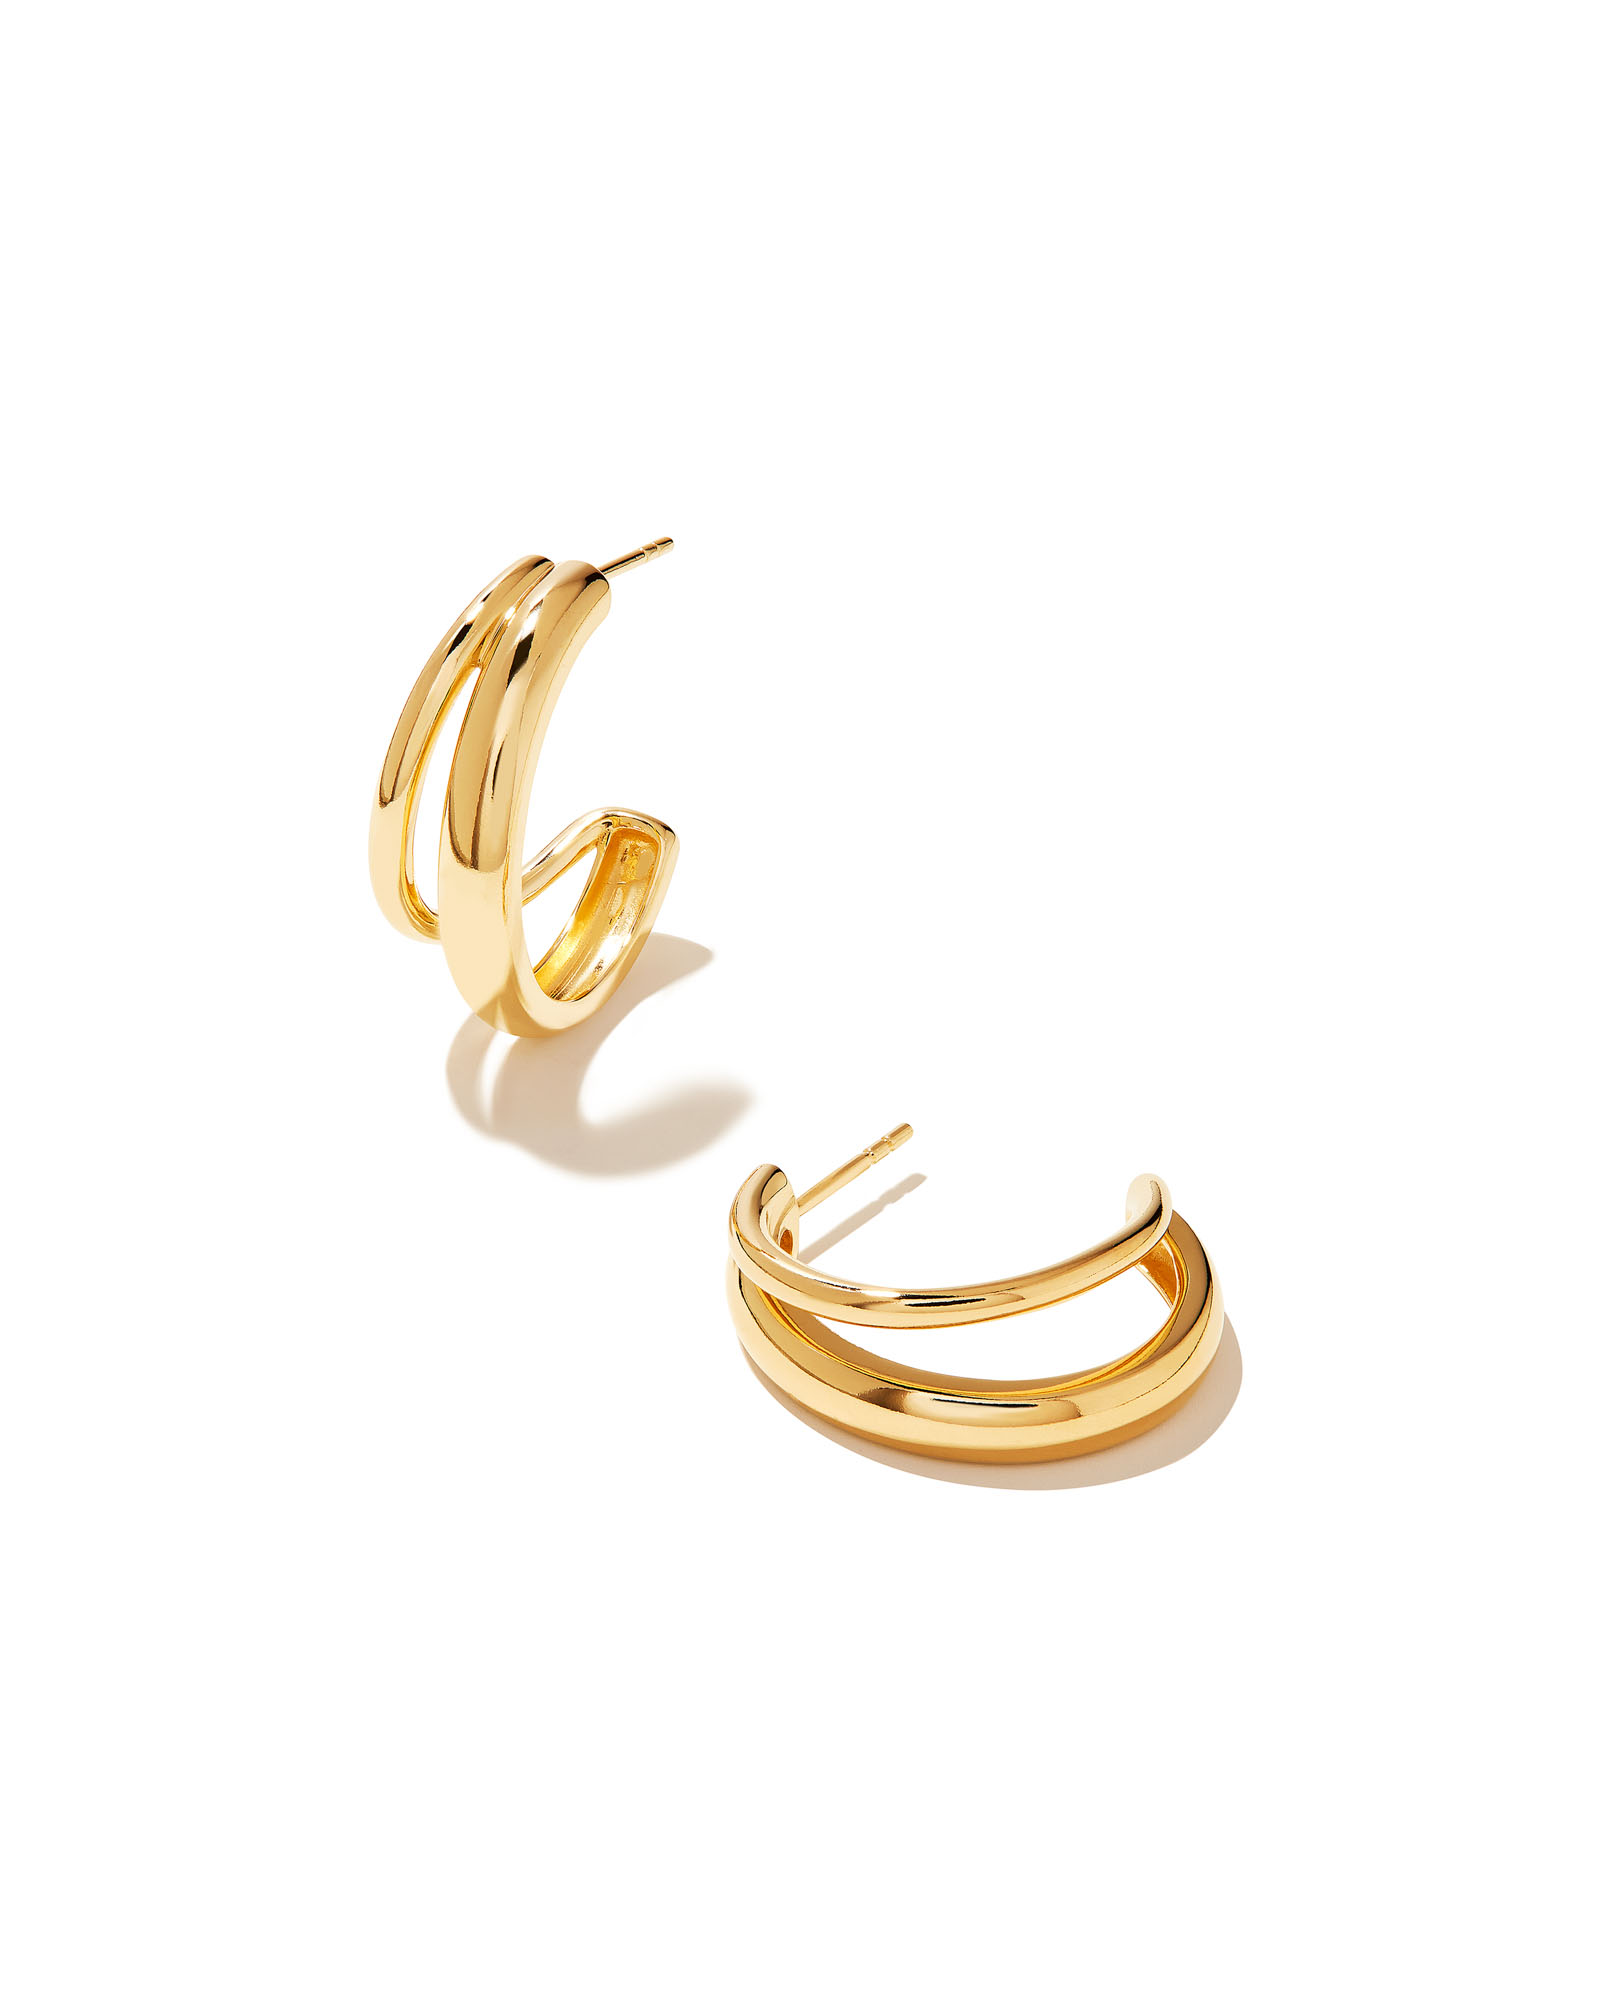 Buy Gold Plated U Shaped Twisted Hoop Earrings Online – The Jewelbox